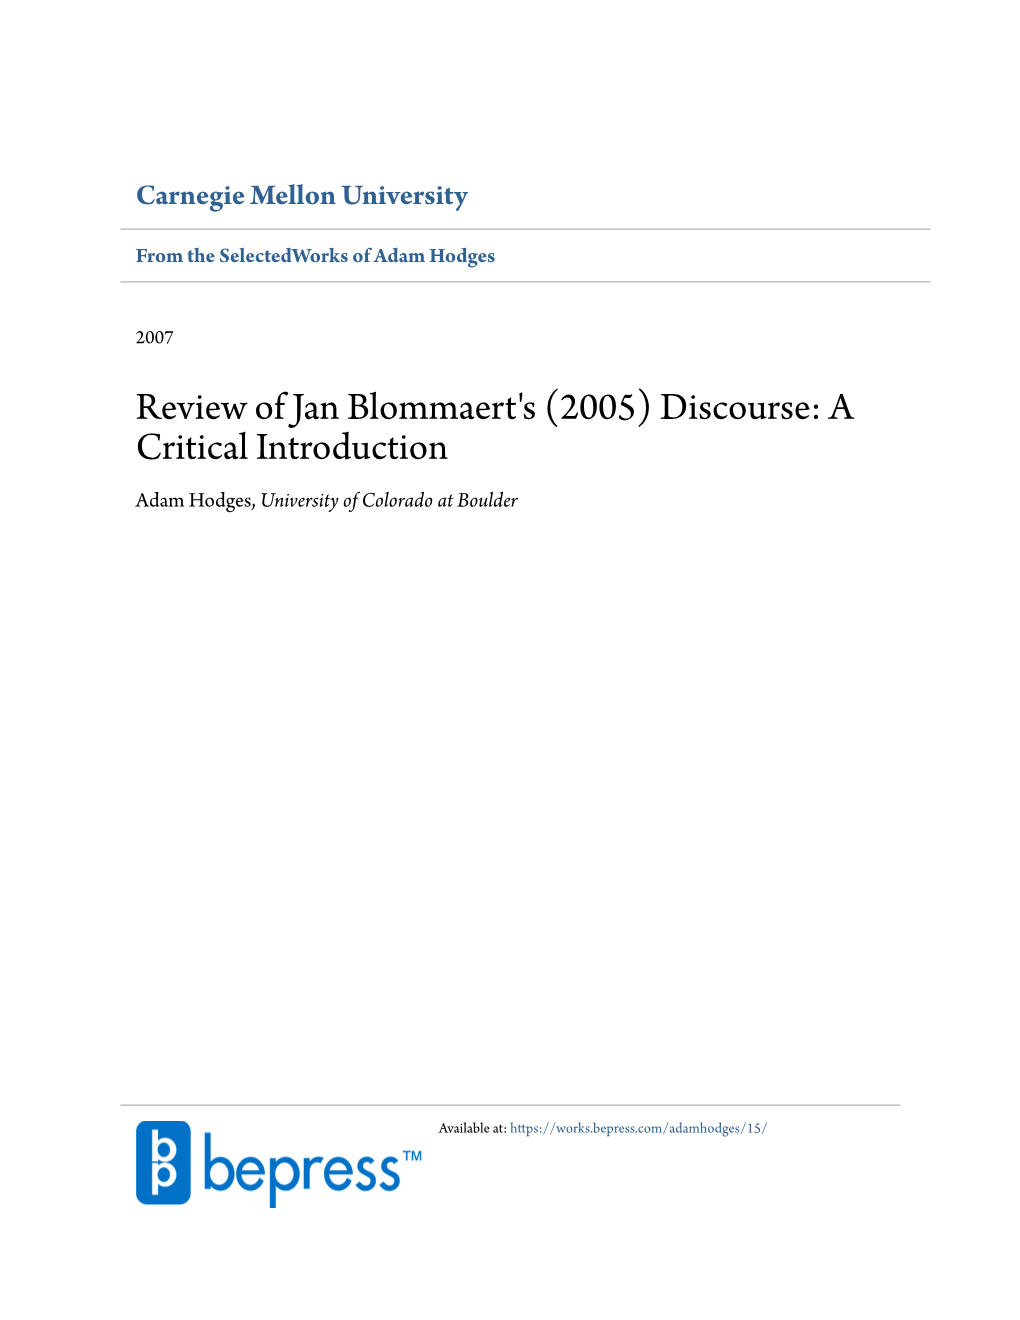 Review of Jan Blommaert's (2005) Discourse: a Critical Introduction Adam Hodges, University of Colorado at Boulder